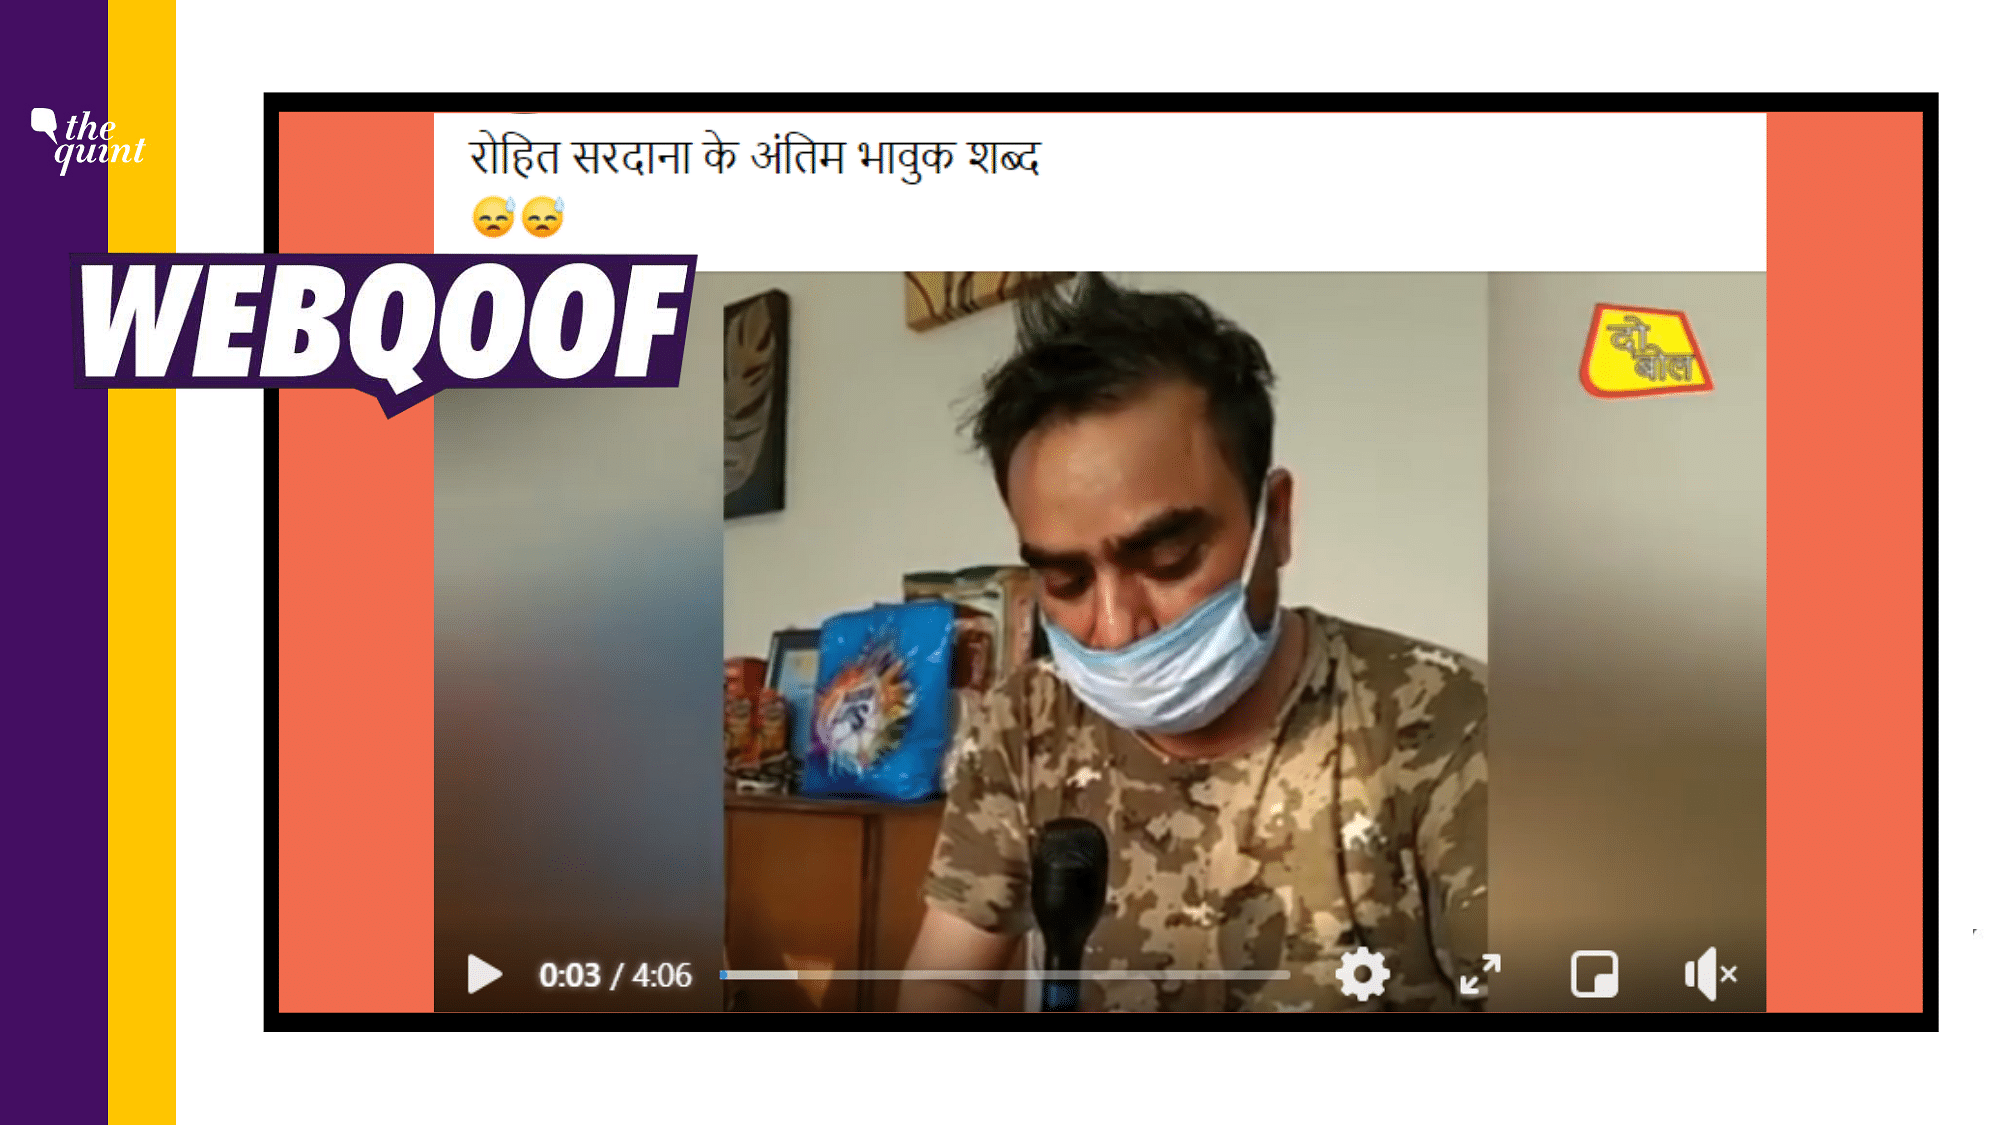 The man in the viral clip is journalist Navin Kumar.